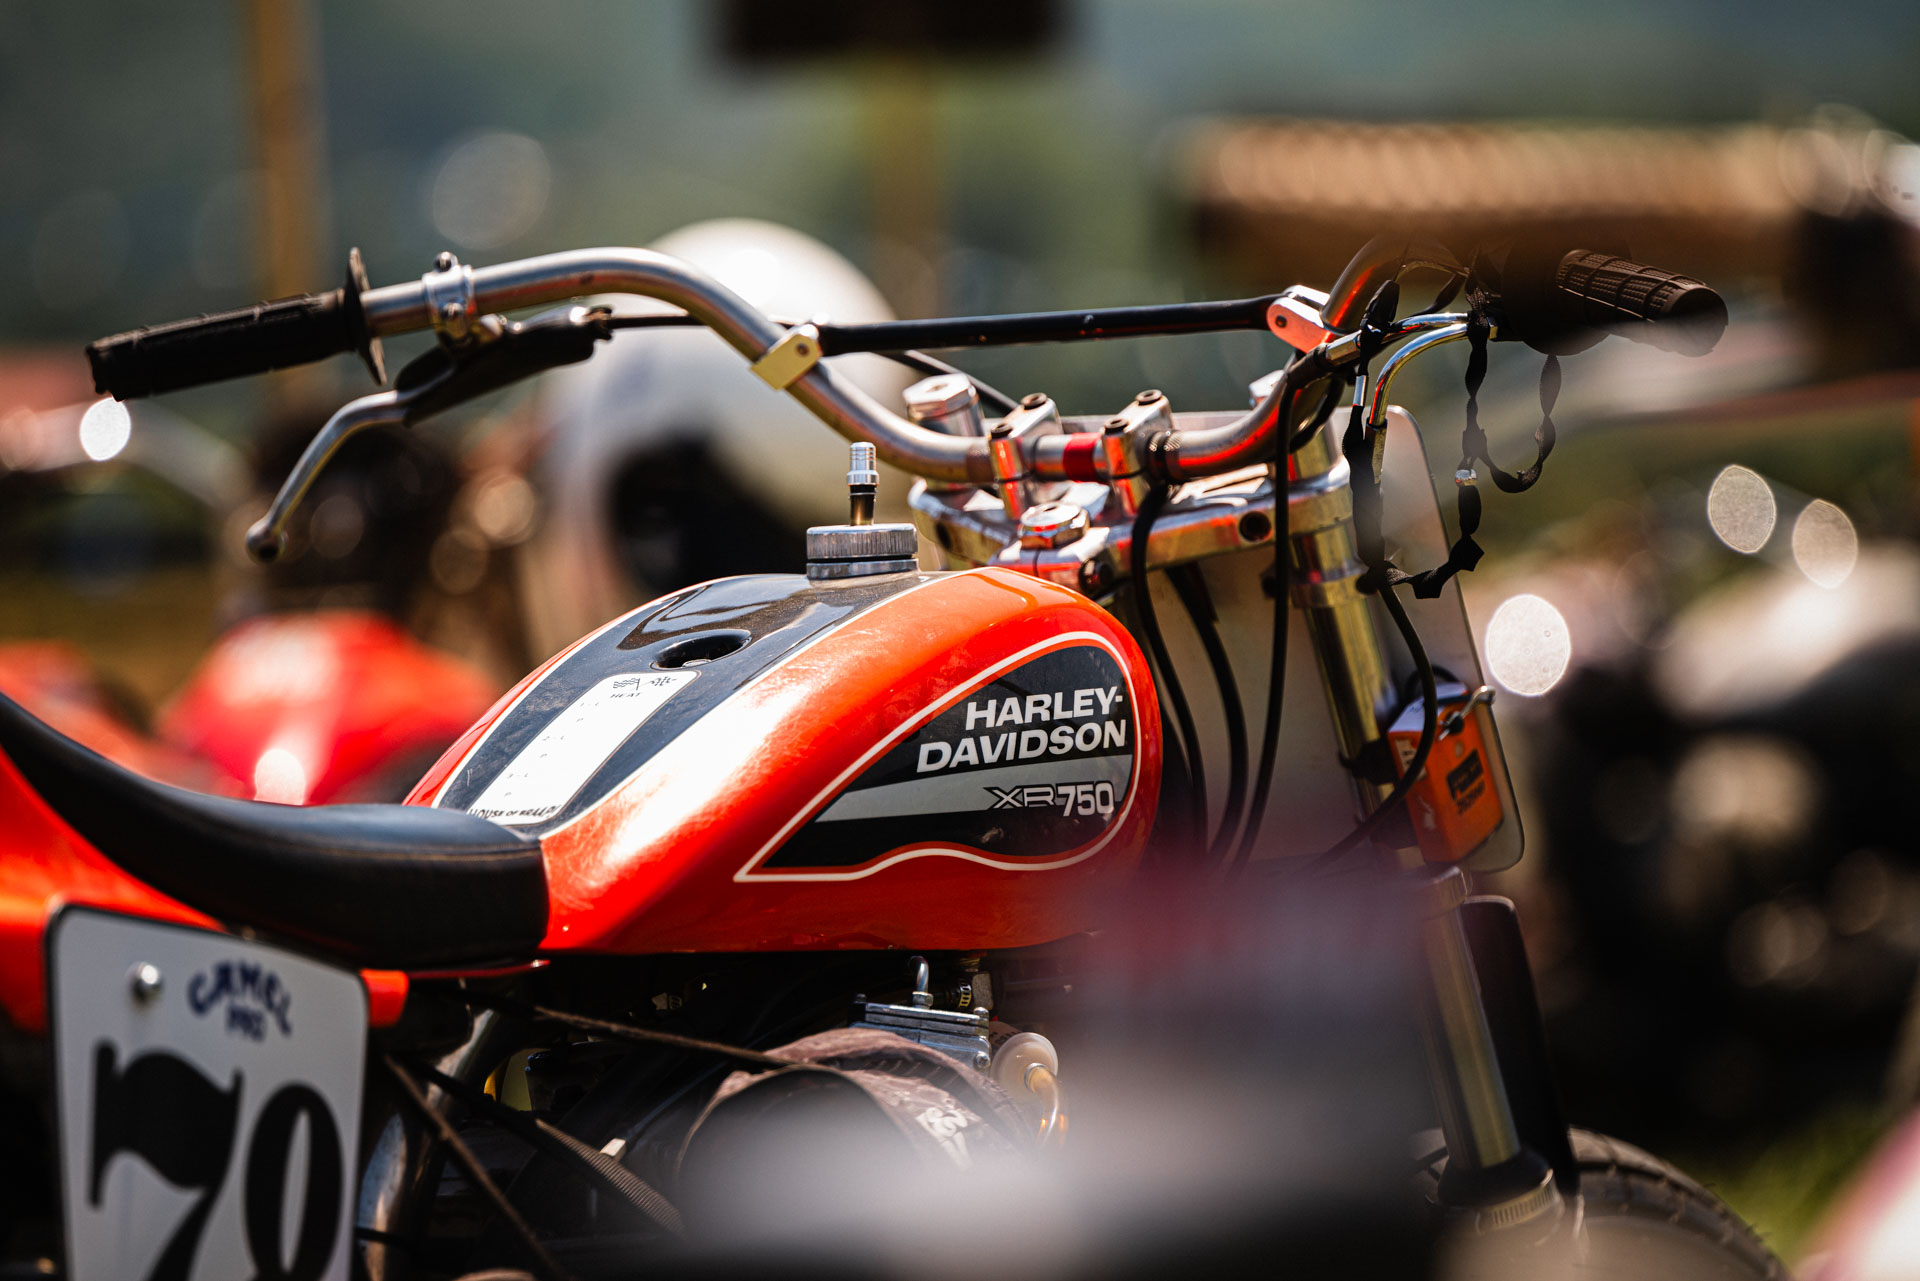 Harley Davidson XR 750